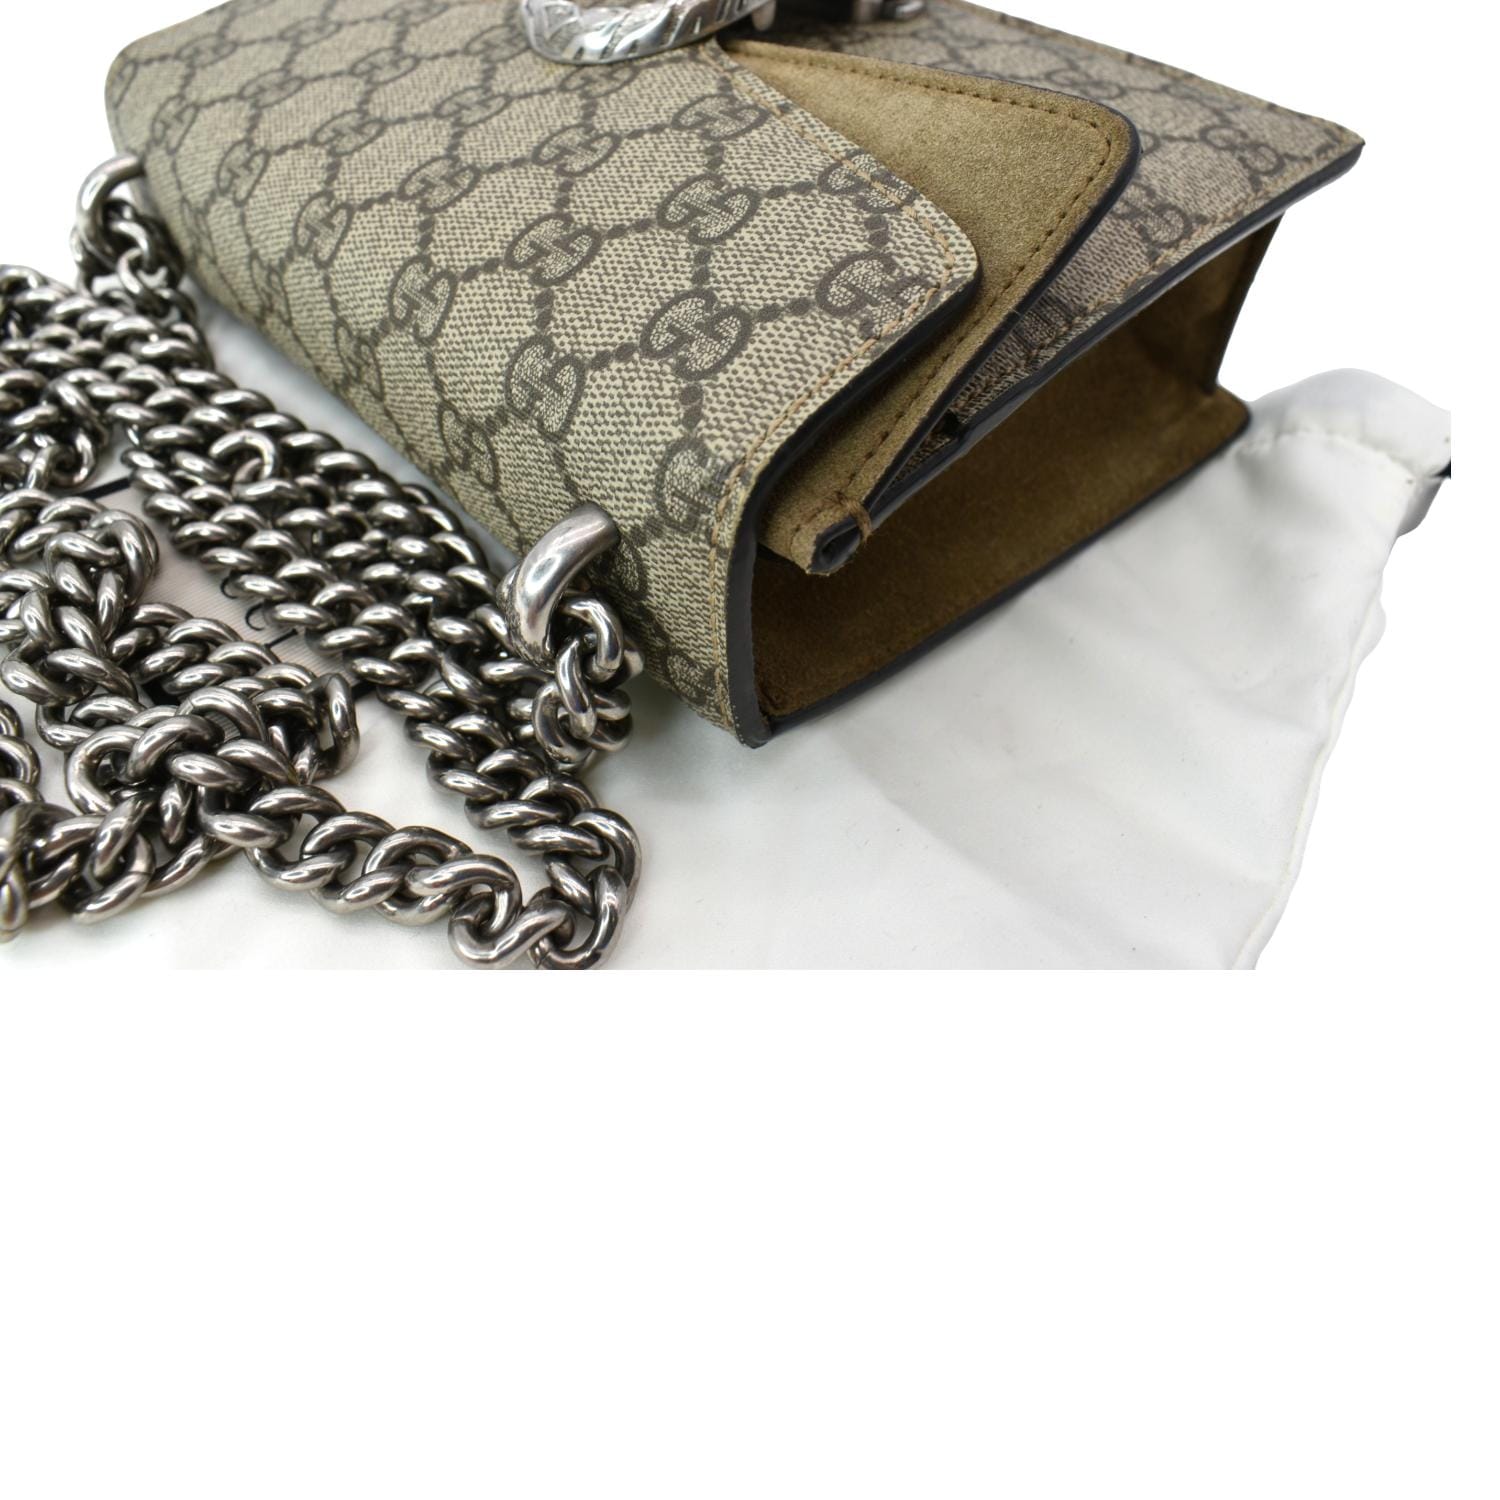 Gucci Dionysus GG Supreme Mini Bag Beige Chain Bag Style ‎421970 KHNRN 8642